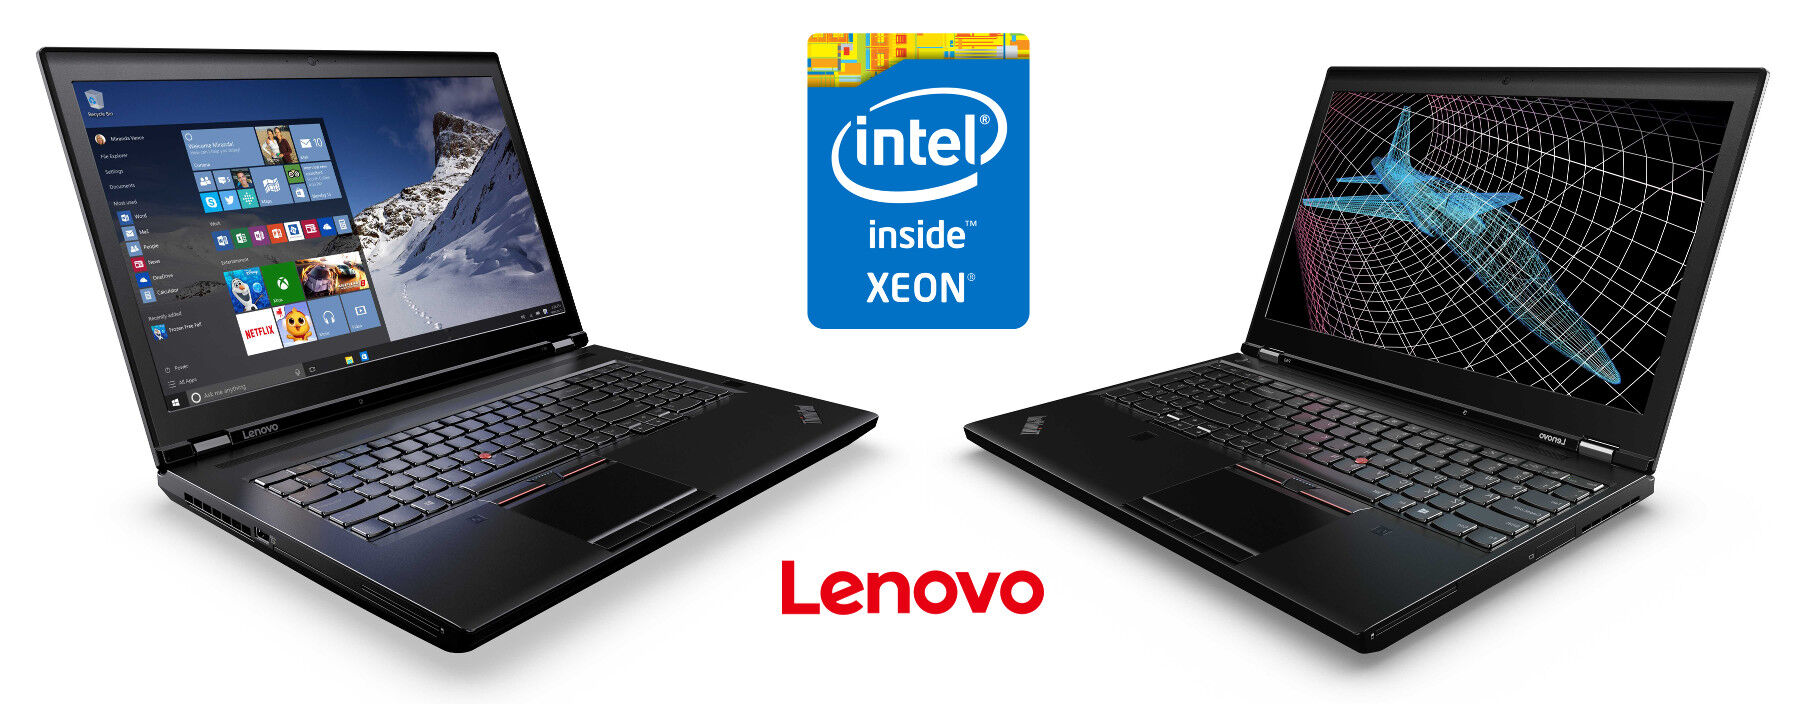 Lenovo announces workstation laptops based on mobile Intel Xeon processors 27